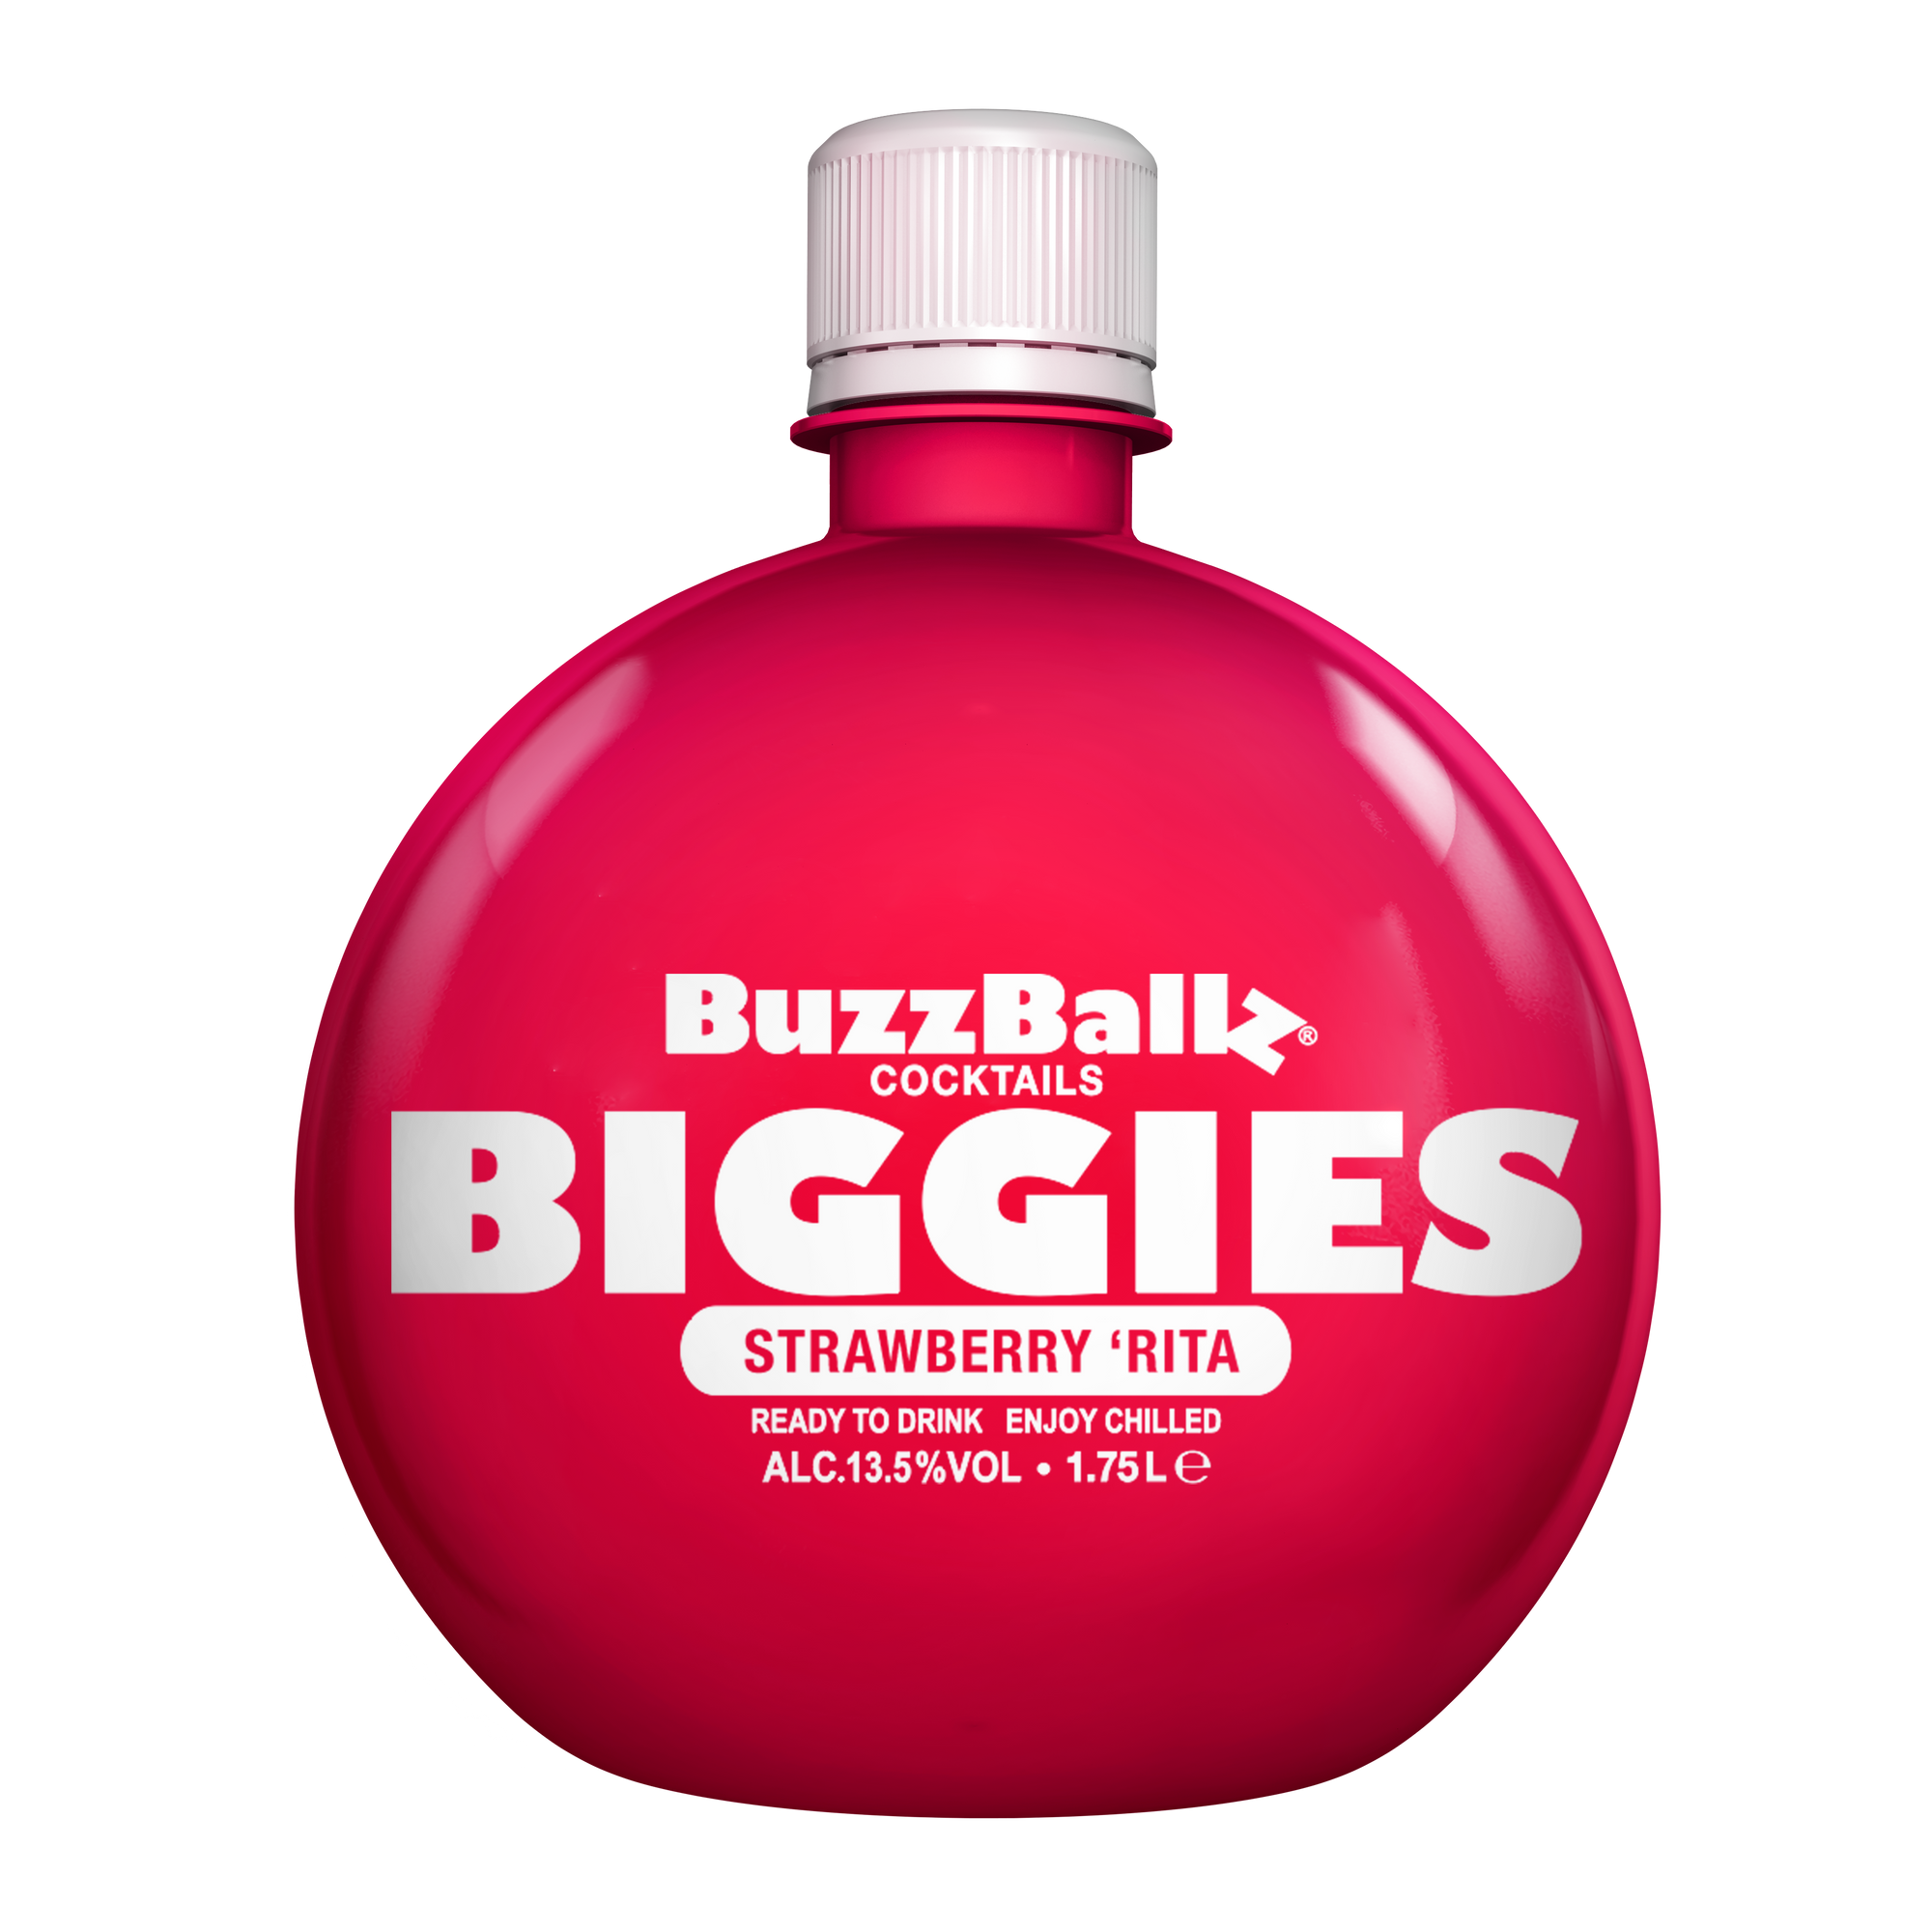 Buzz Ballz Biggie Strawberry Rita 1.75L